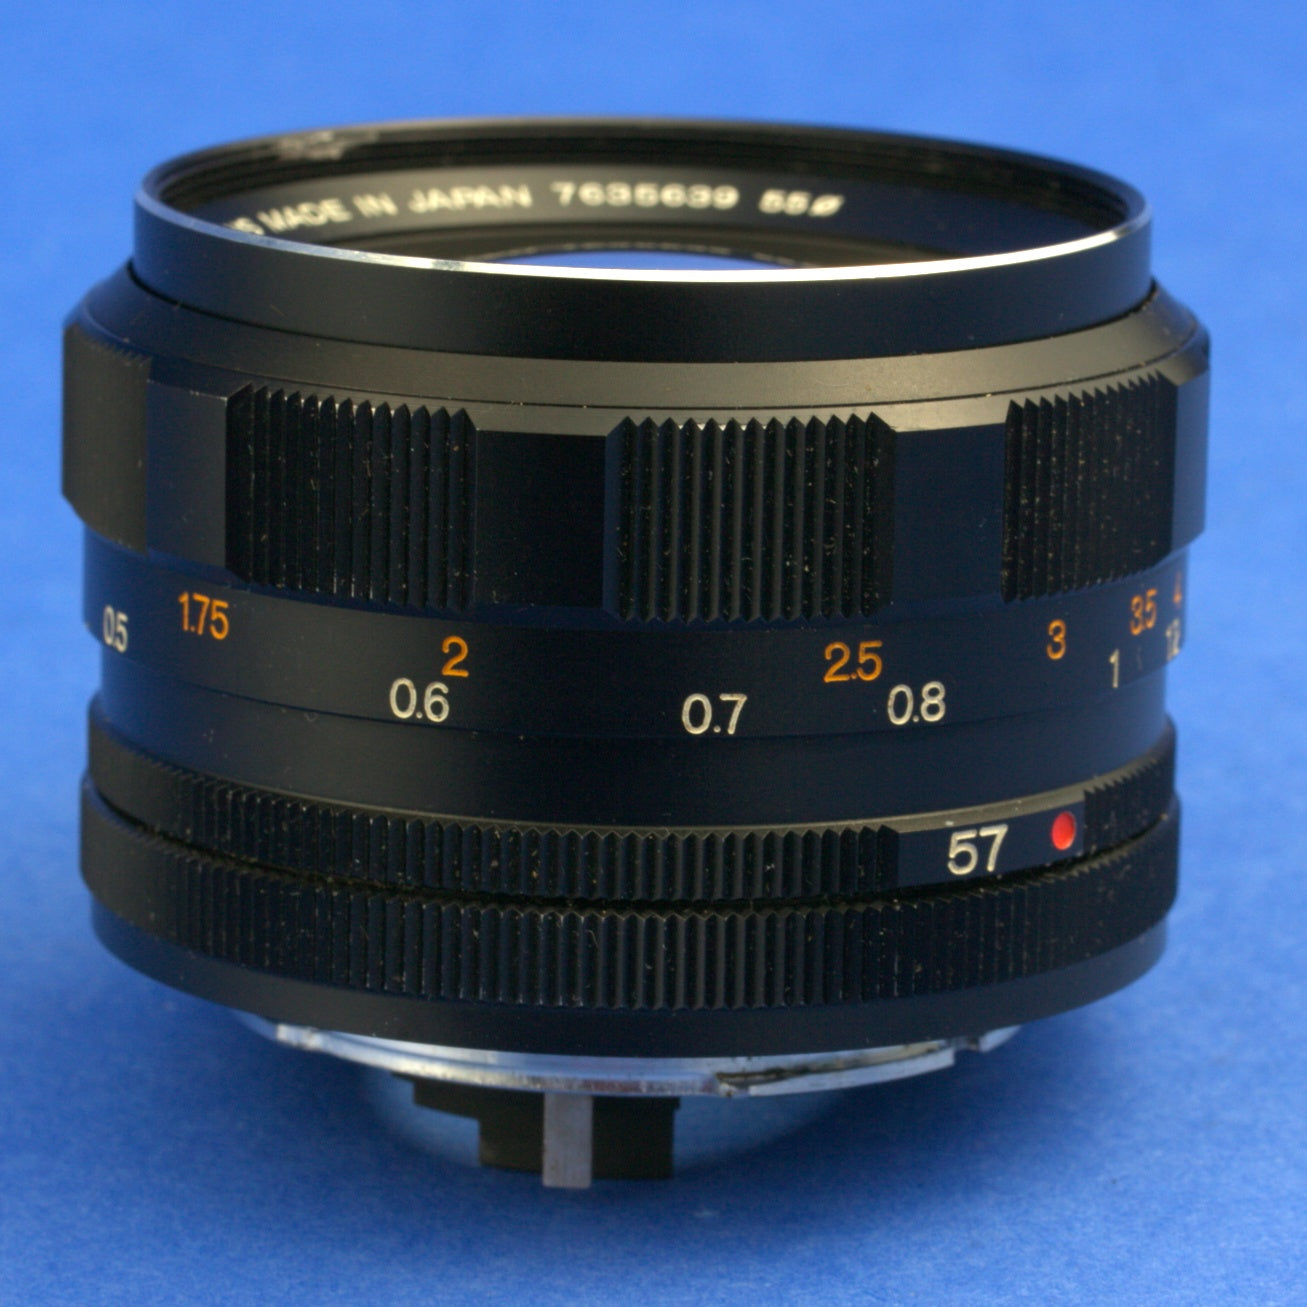 Konica Hexanon AR 57mm 1.4 Lens